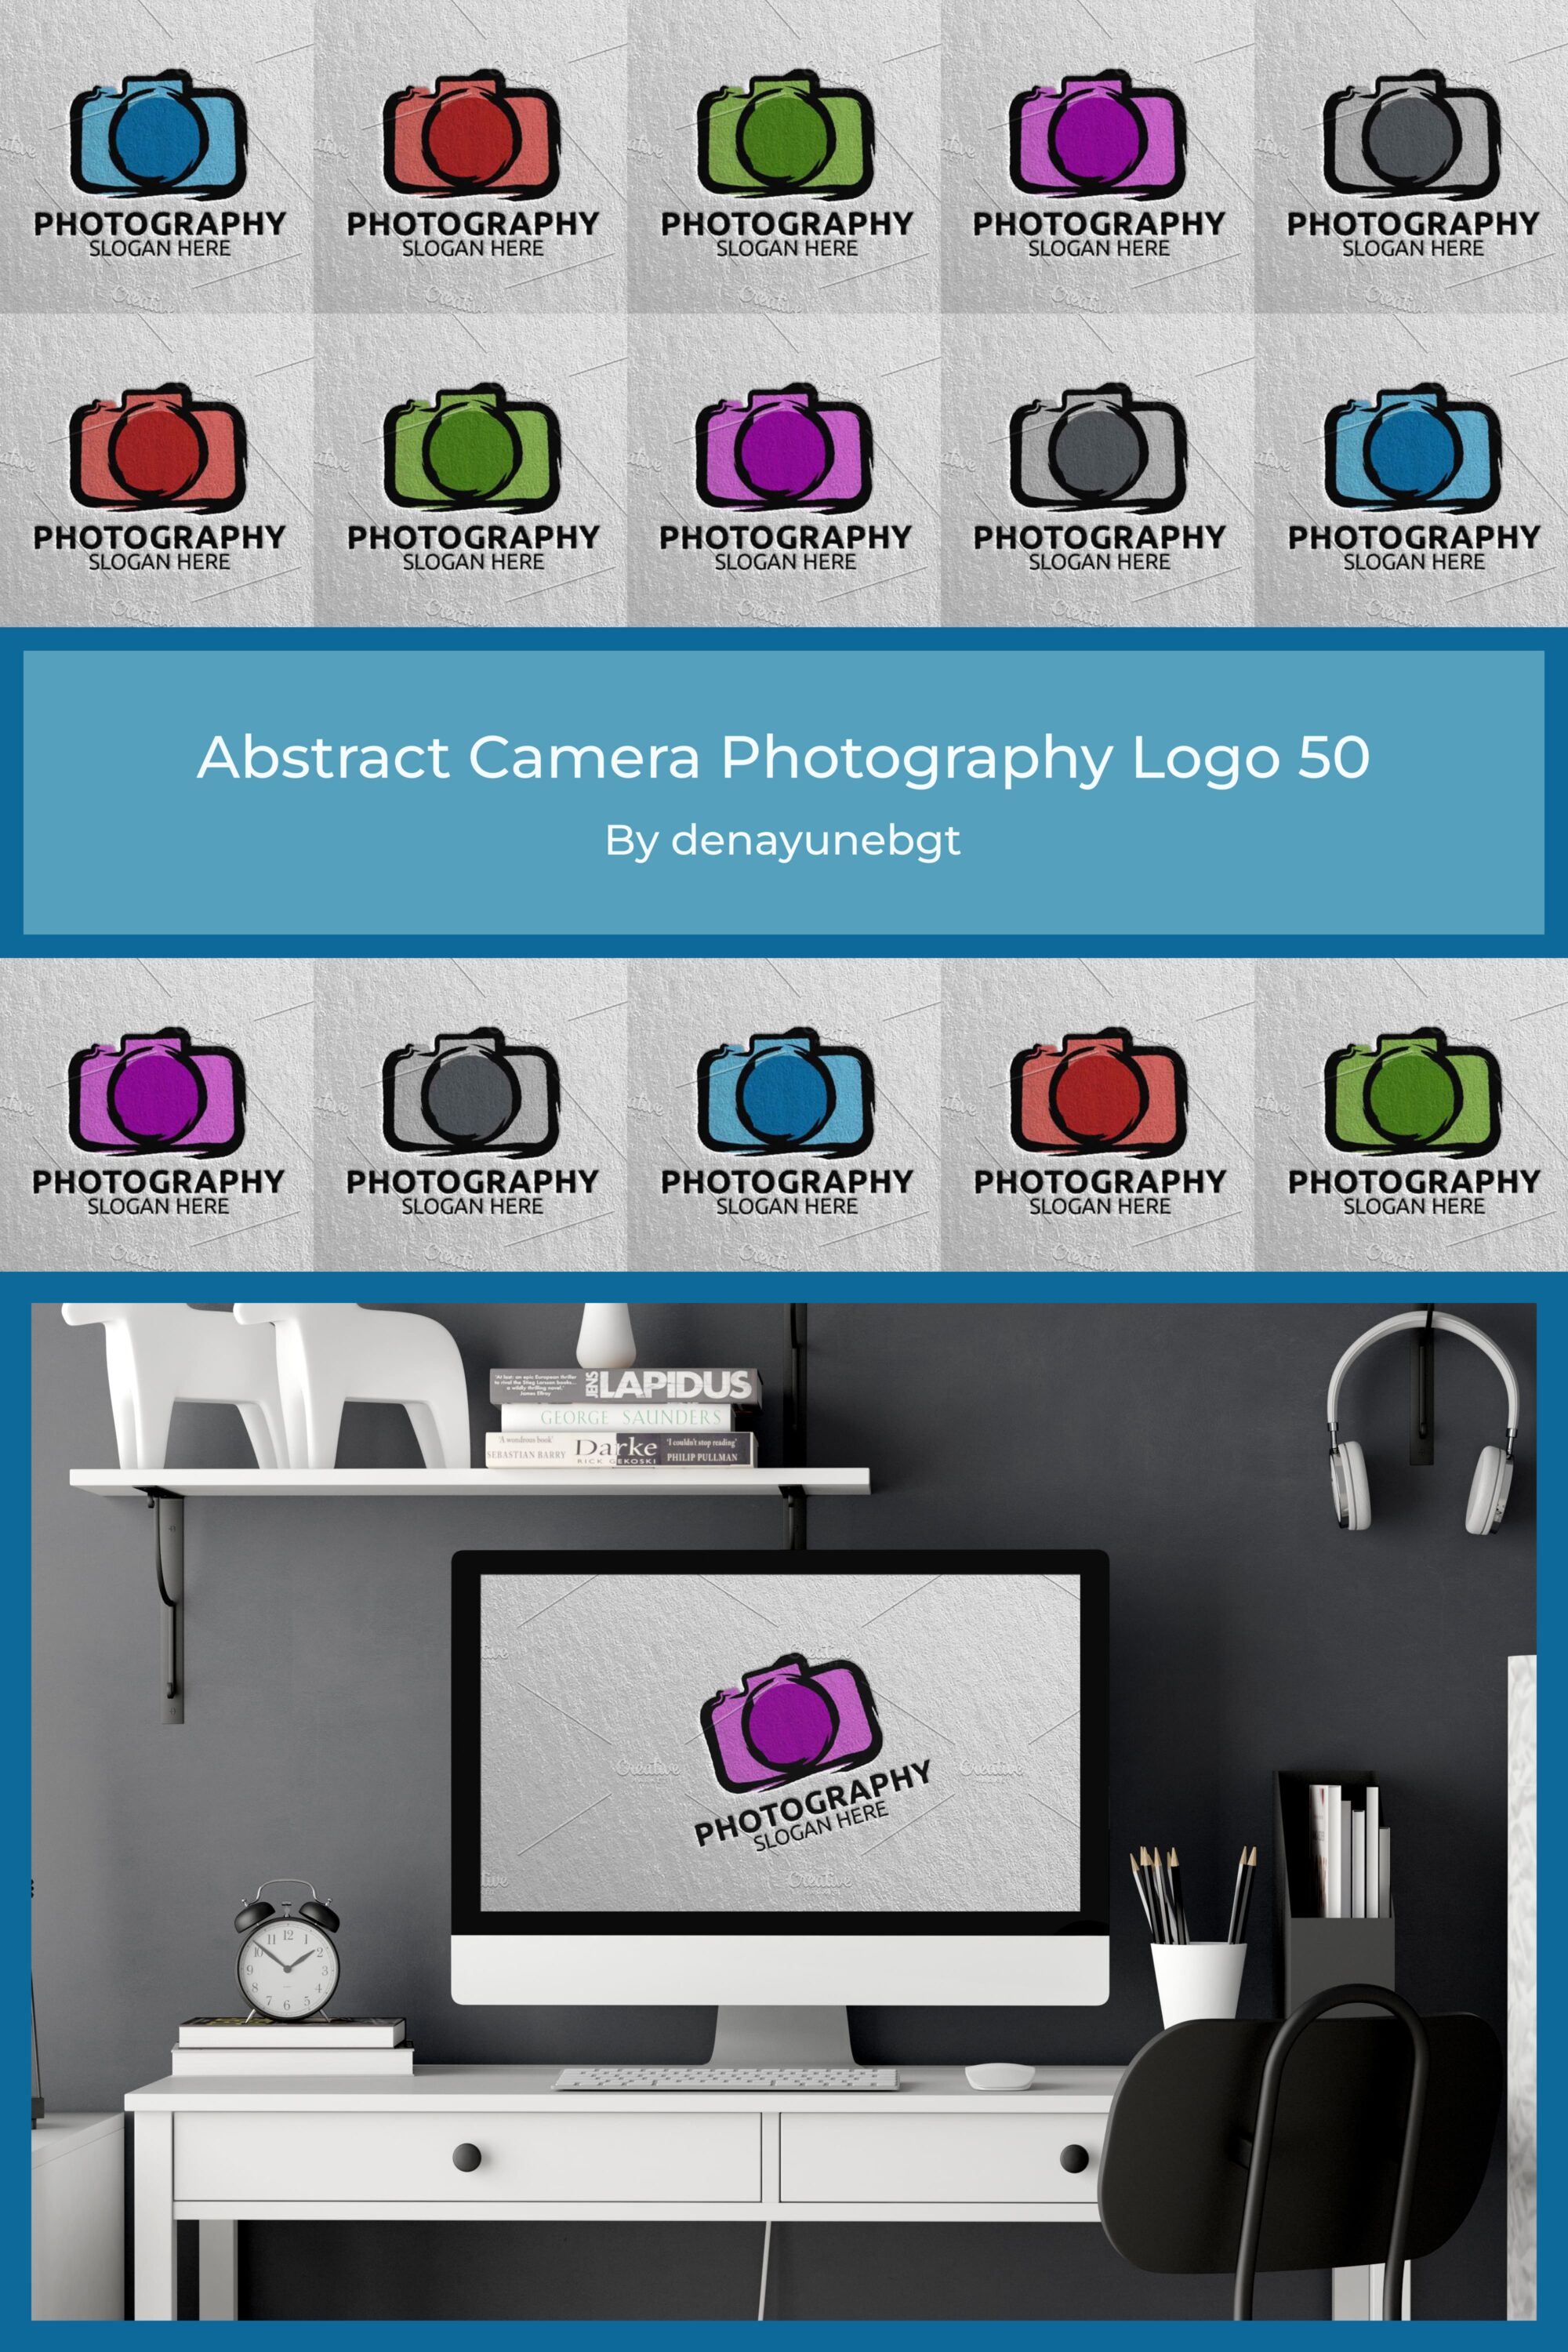 abstract camera photography logo 50 03 630